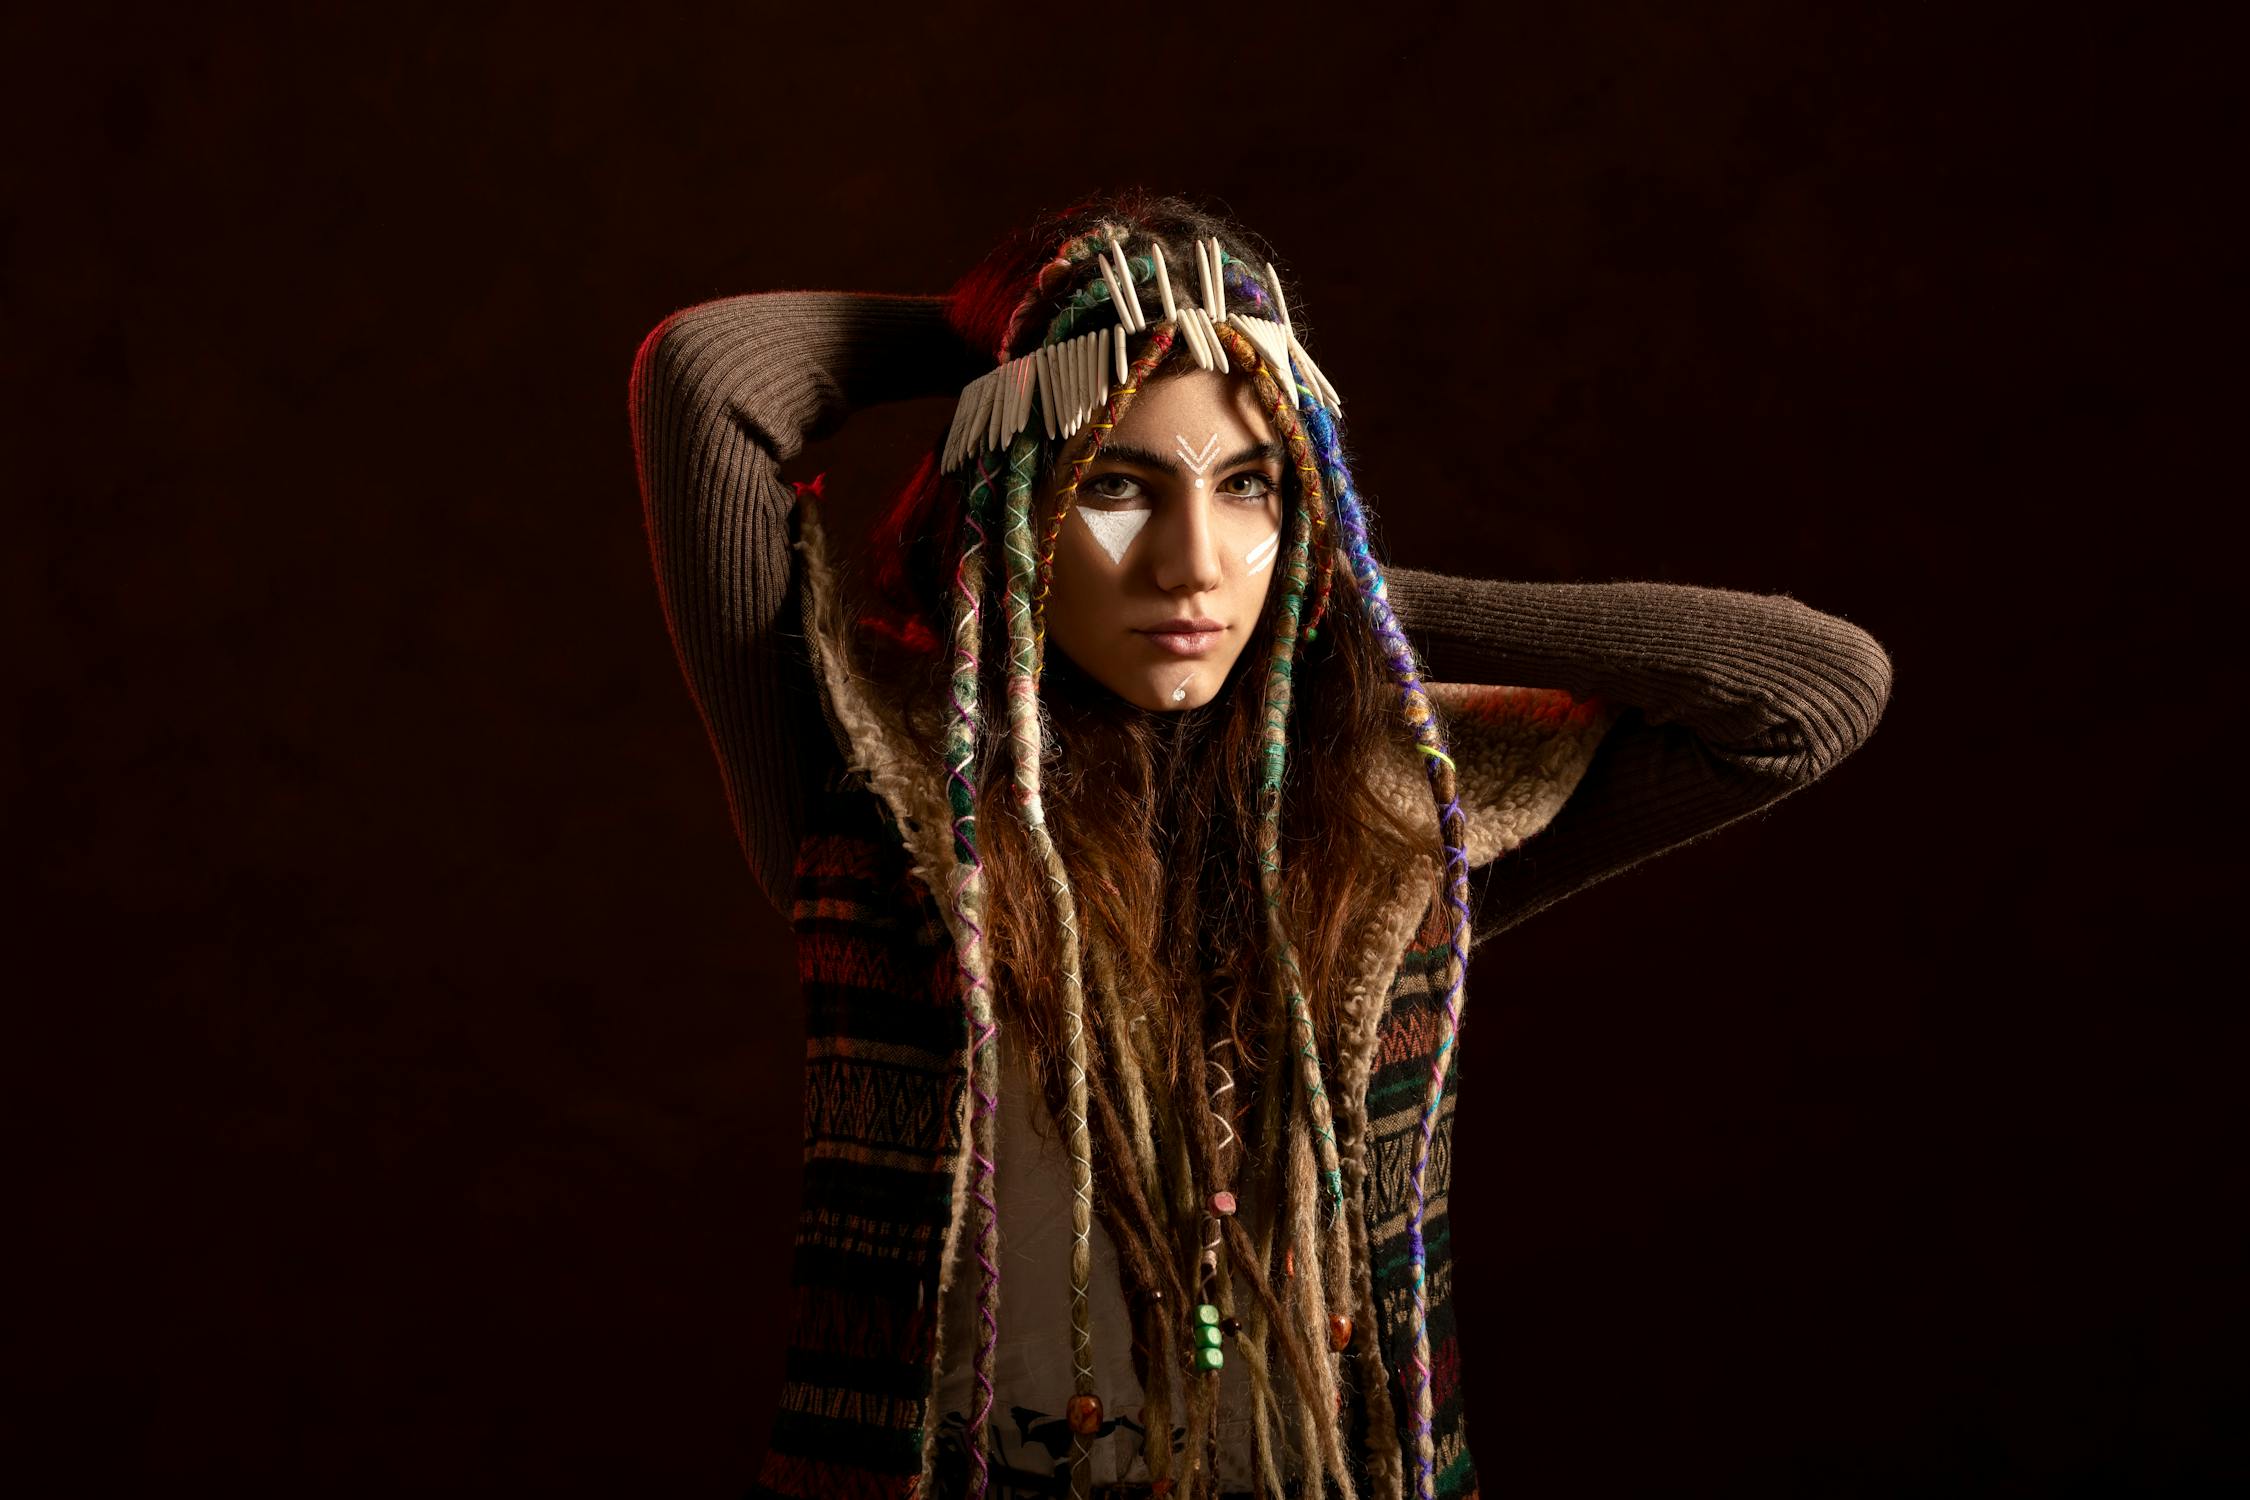 Indian Beauty Photo by Ehsan from Pexels: https://www.pexels.com/photo/trendy-ethnic-model-in-tribal-headdress-on-dreadlocks-7795210/